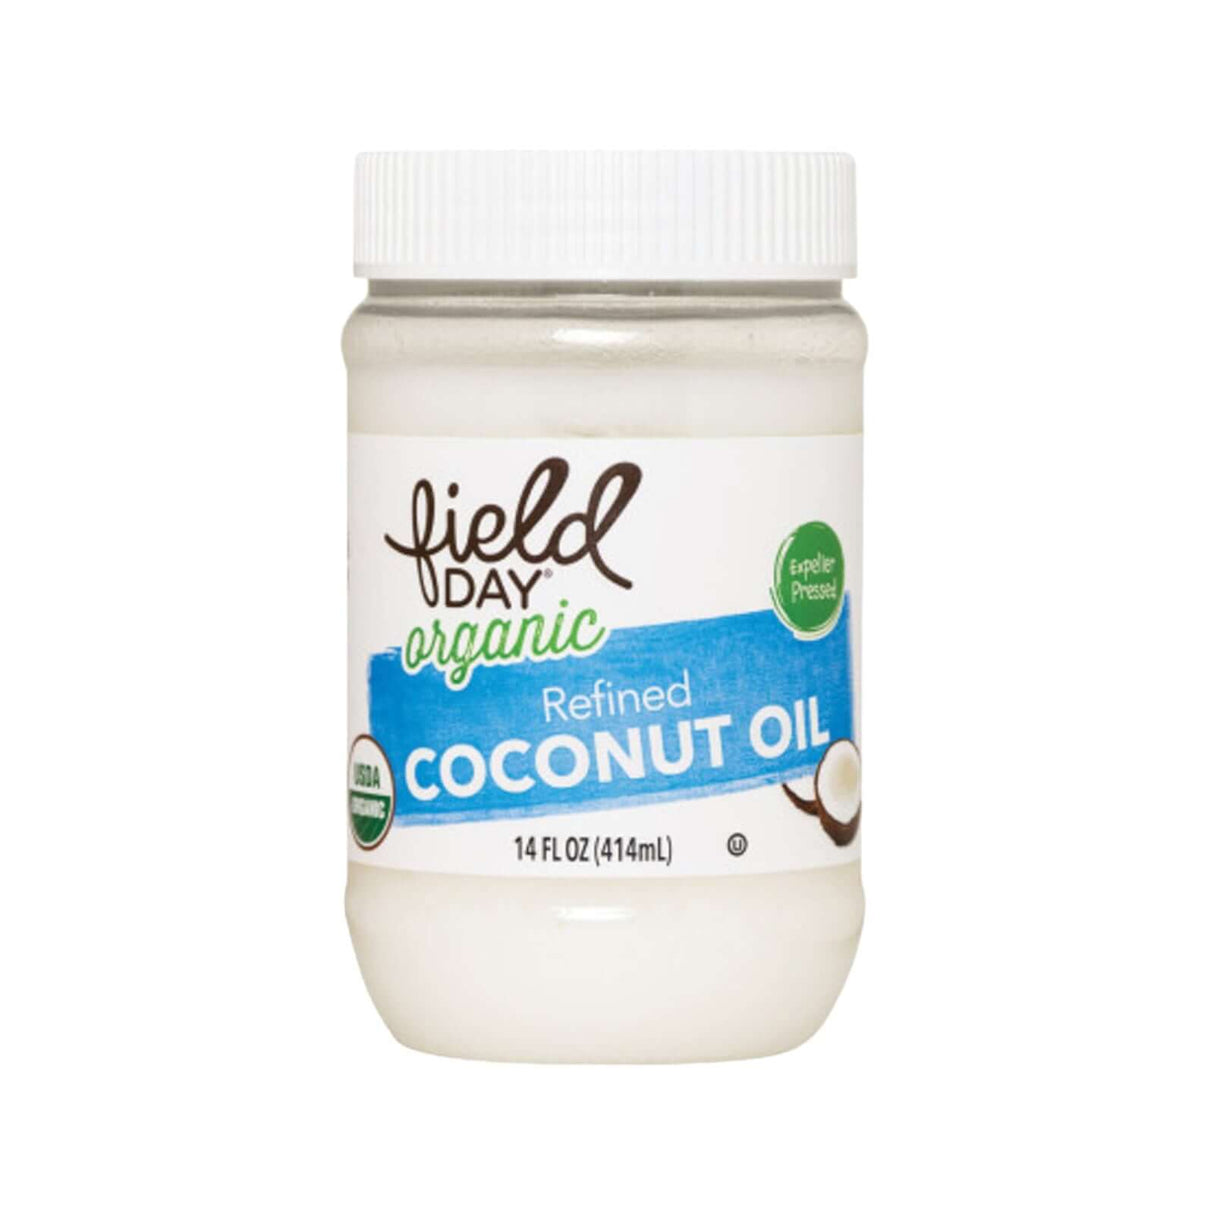 Field Day Organic Refined Coconut Oil